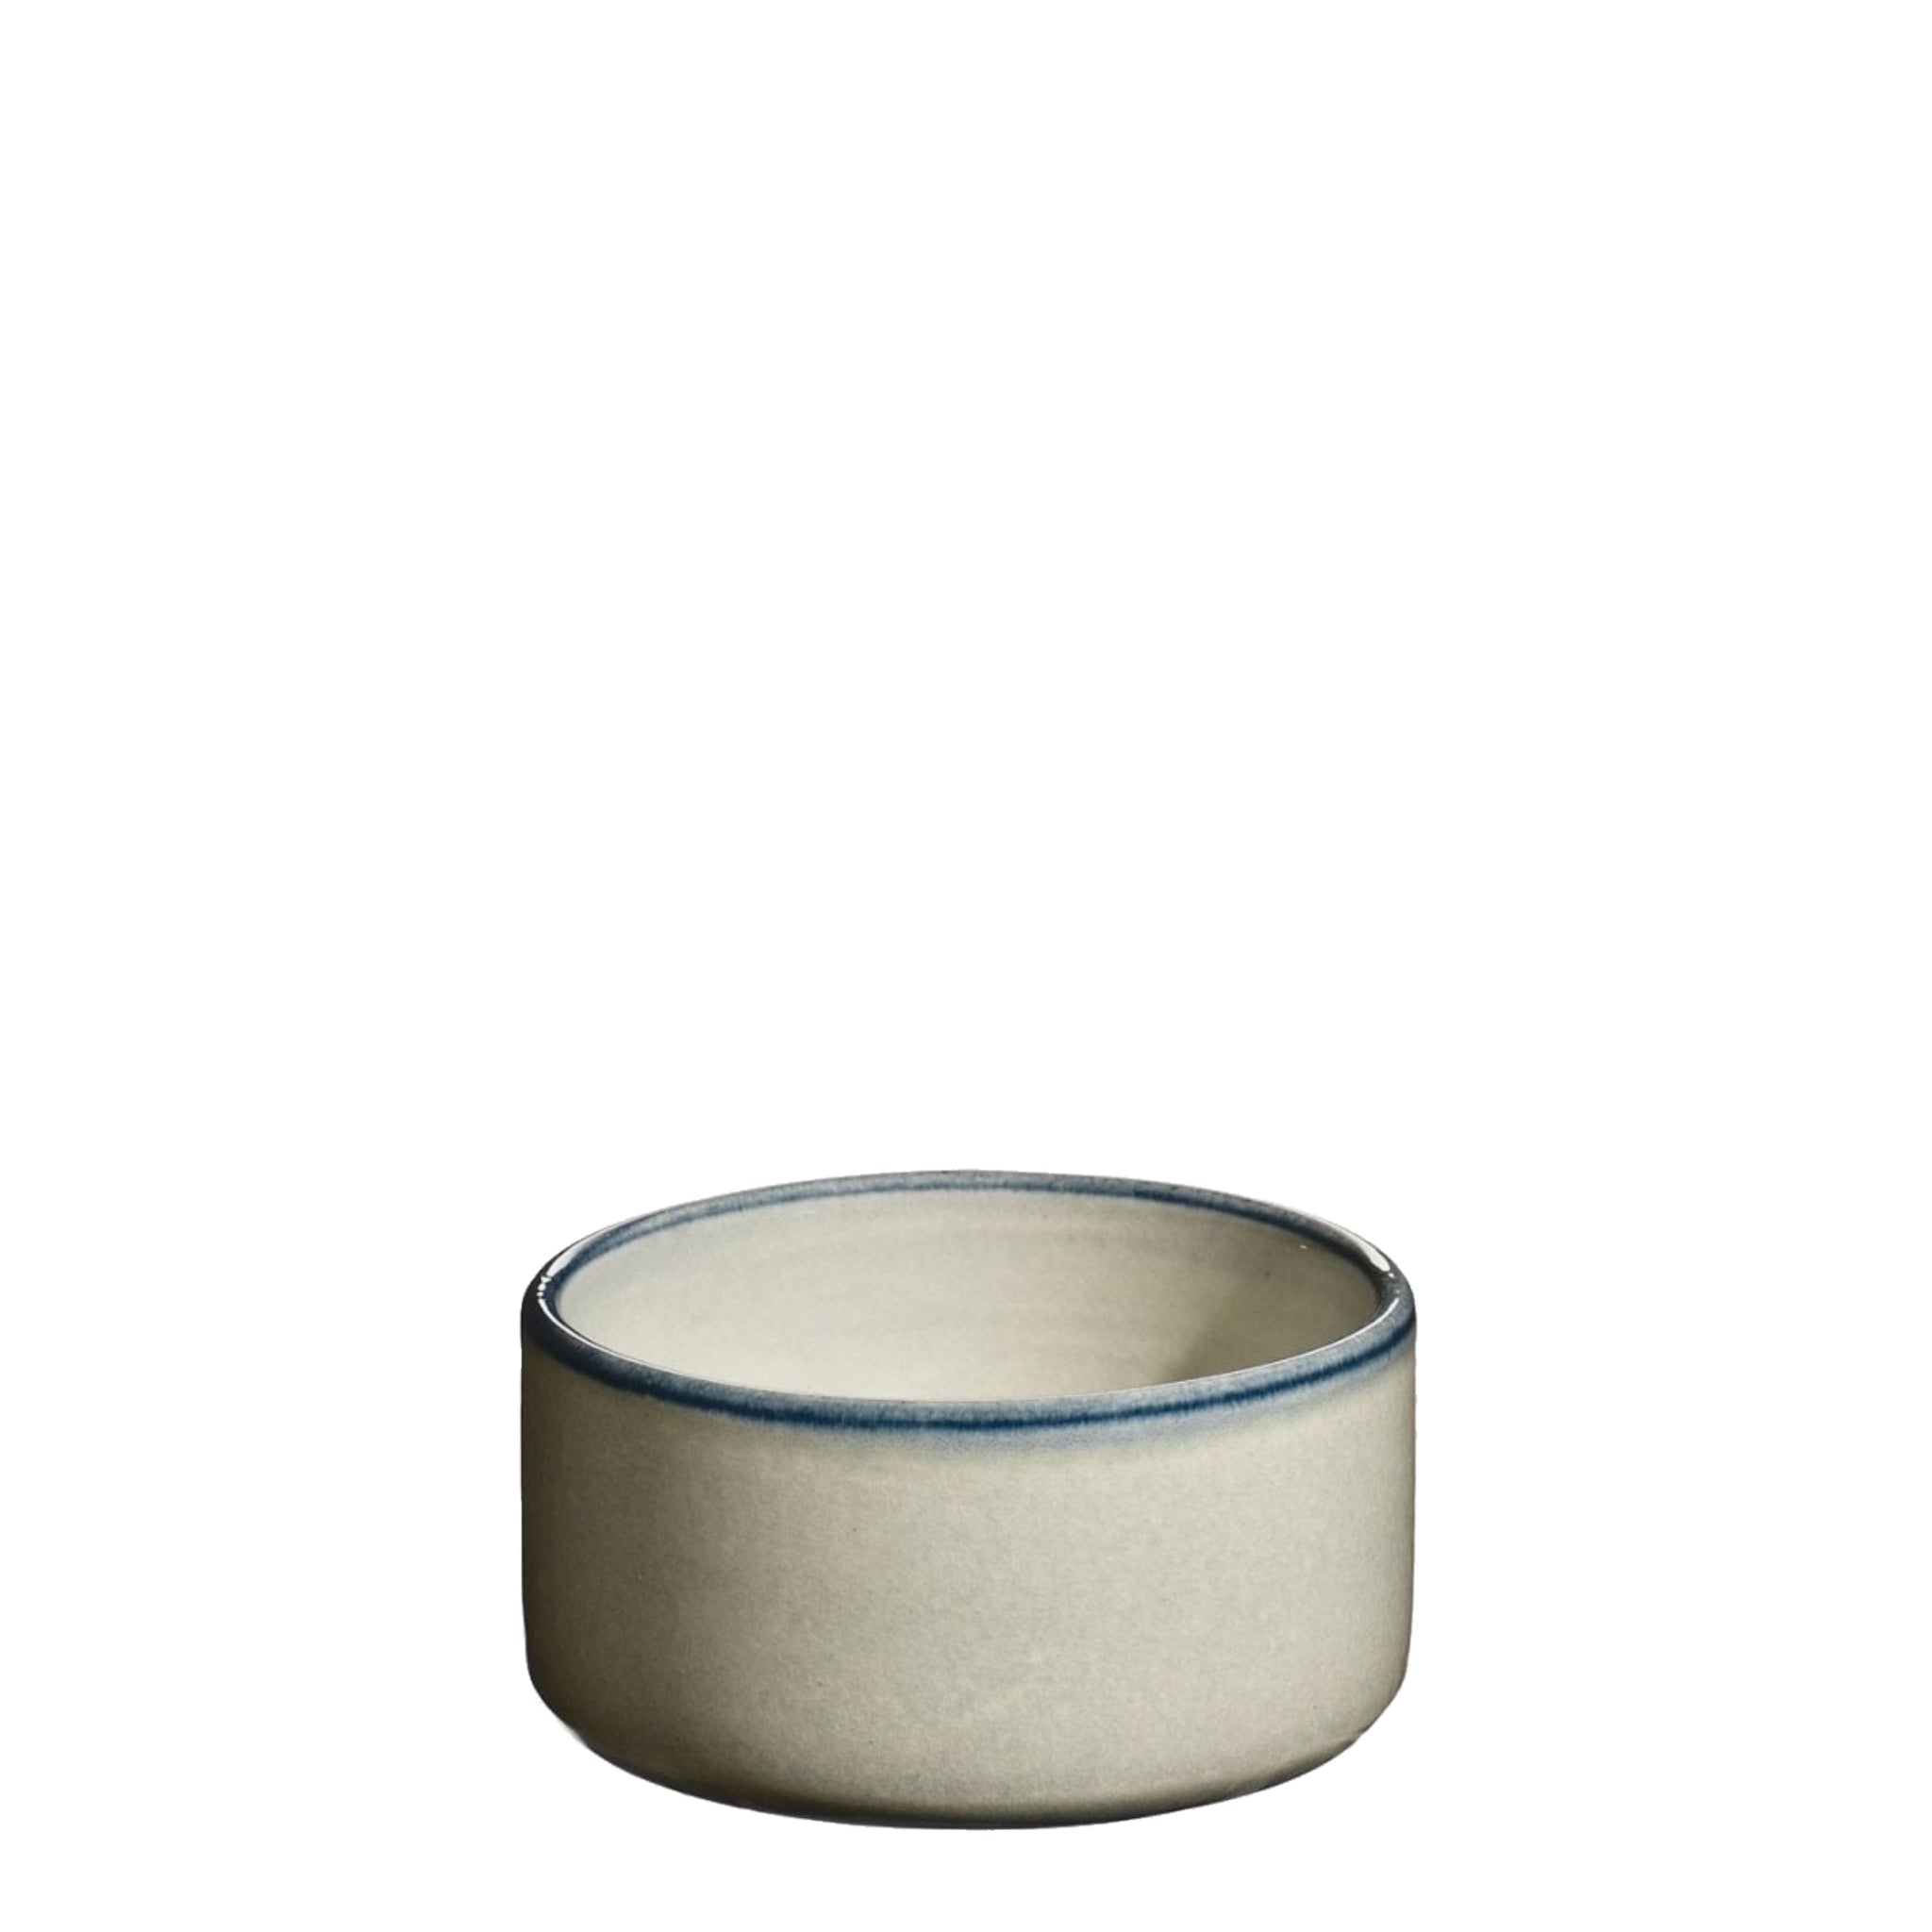 Lille perle grå håndlavet keramik skål ramekin, Atelier Bernex fra Oliviers & Co